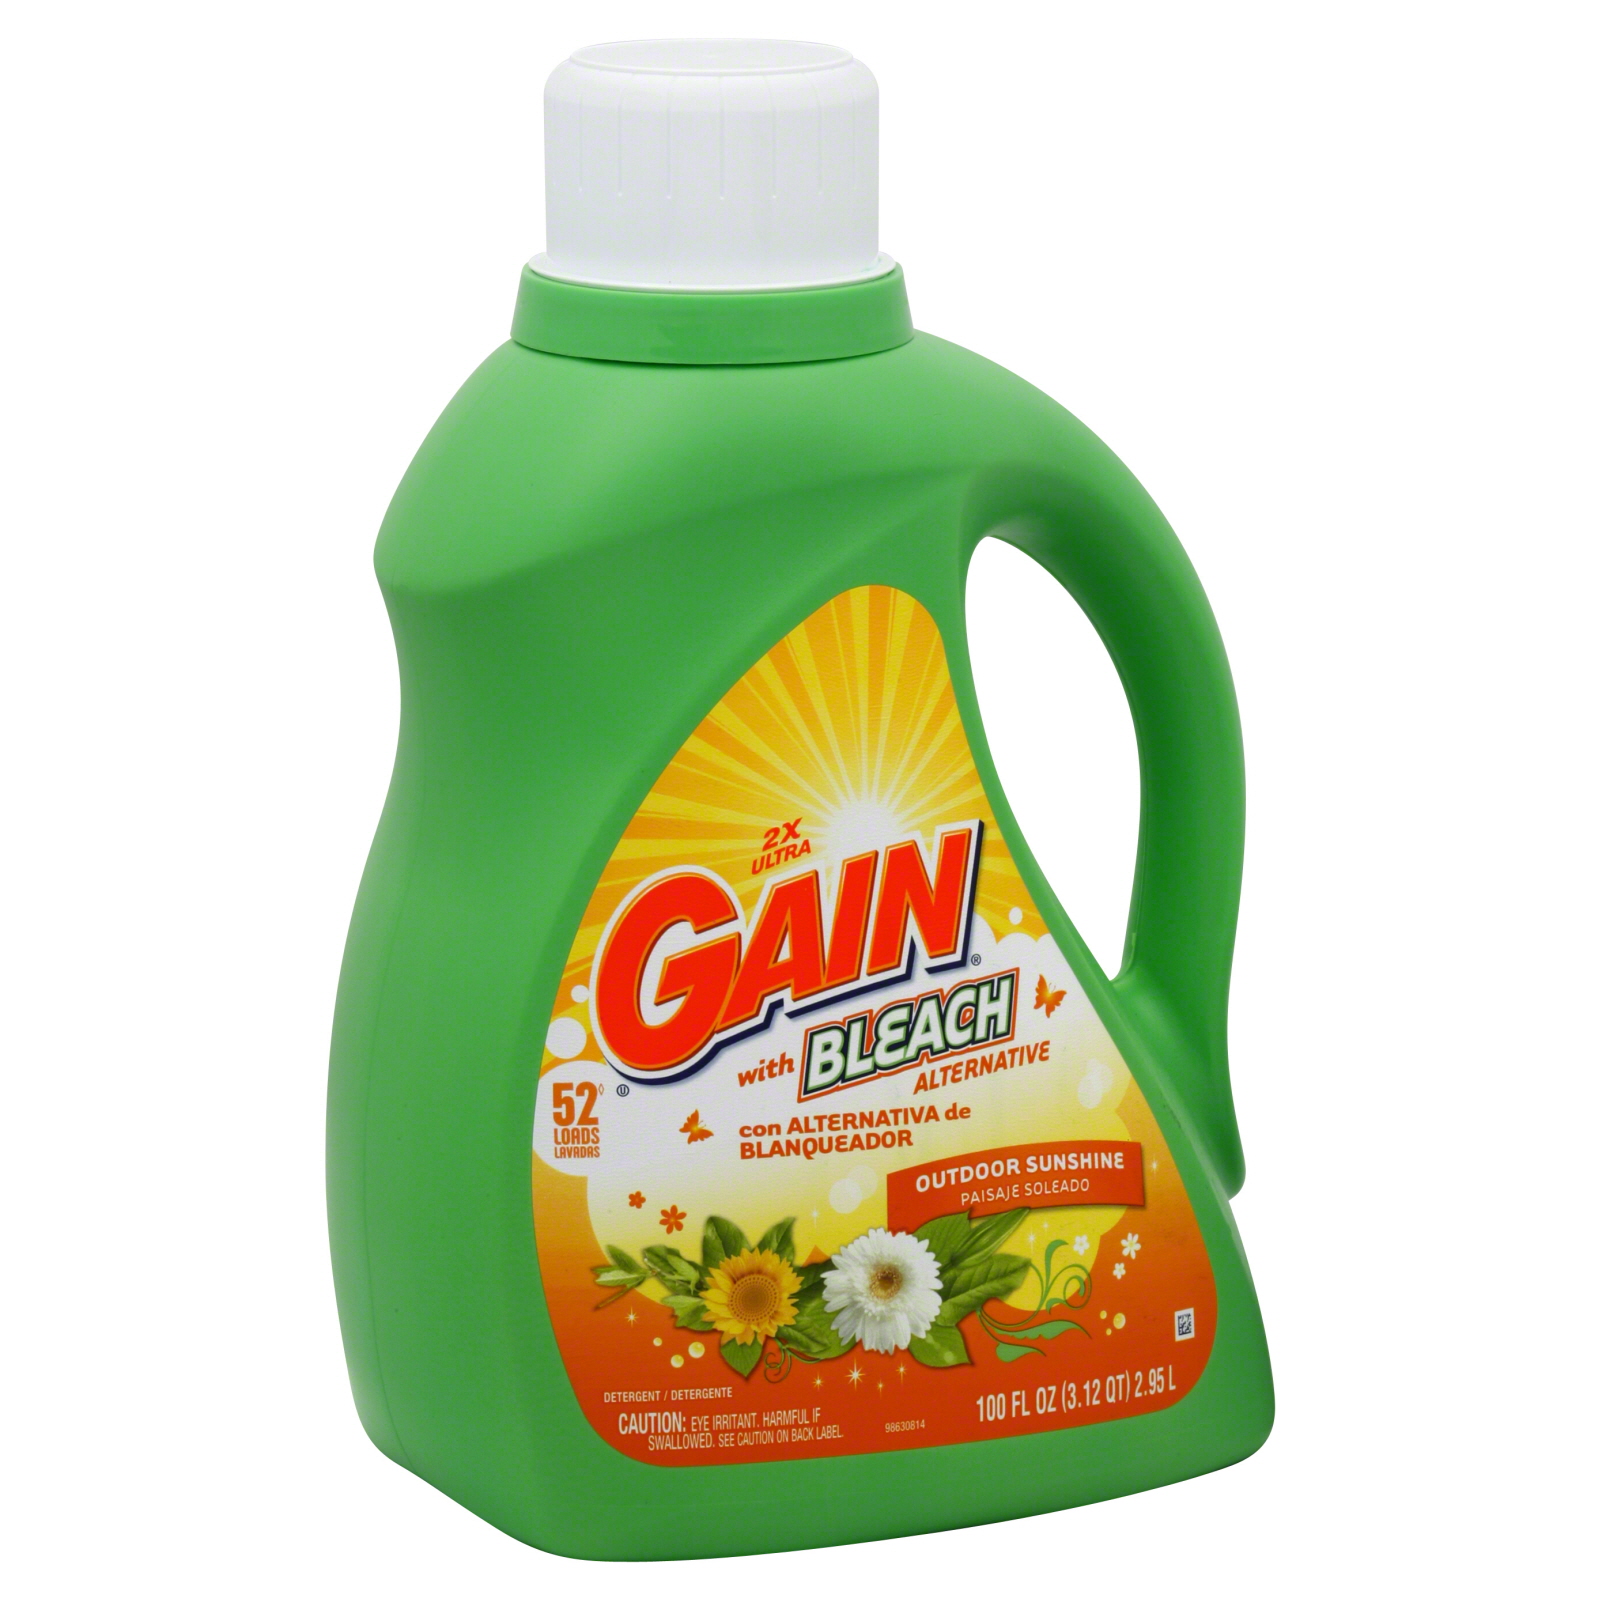 Gain Detergent, with Bleach Alternative, 2x Ultra, Outdoor Sunshine, 100 fl oz (3.12 qt) 2.95 lt